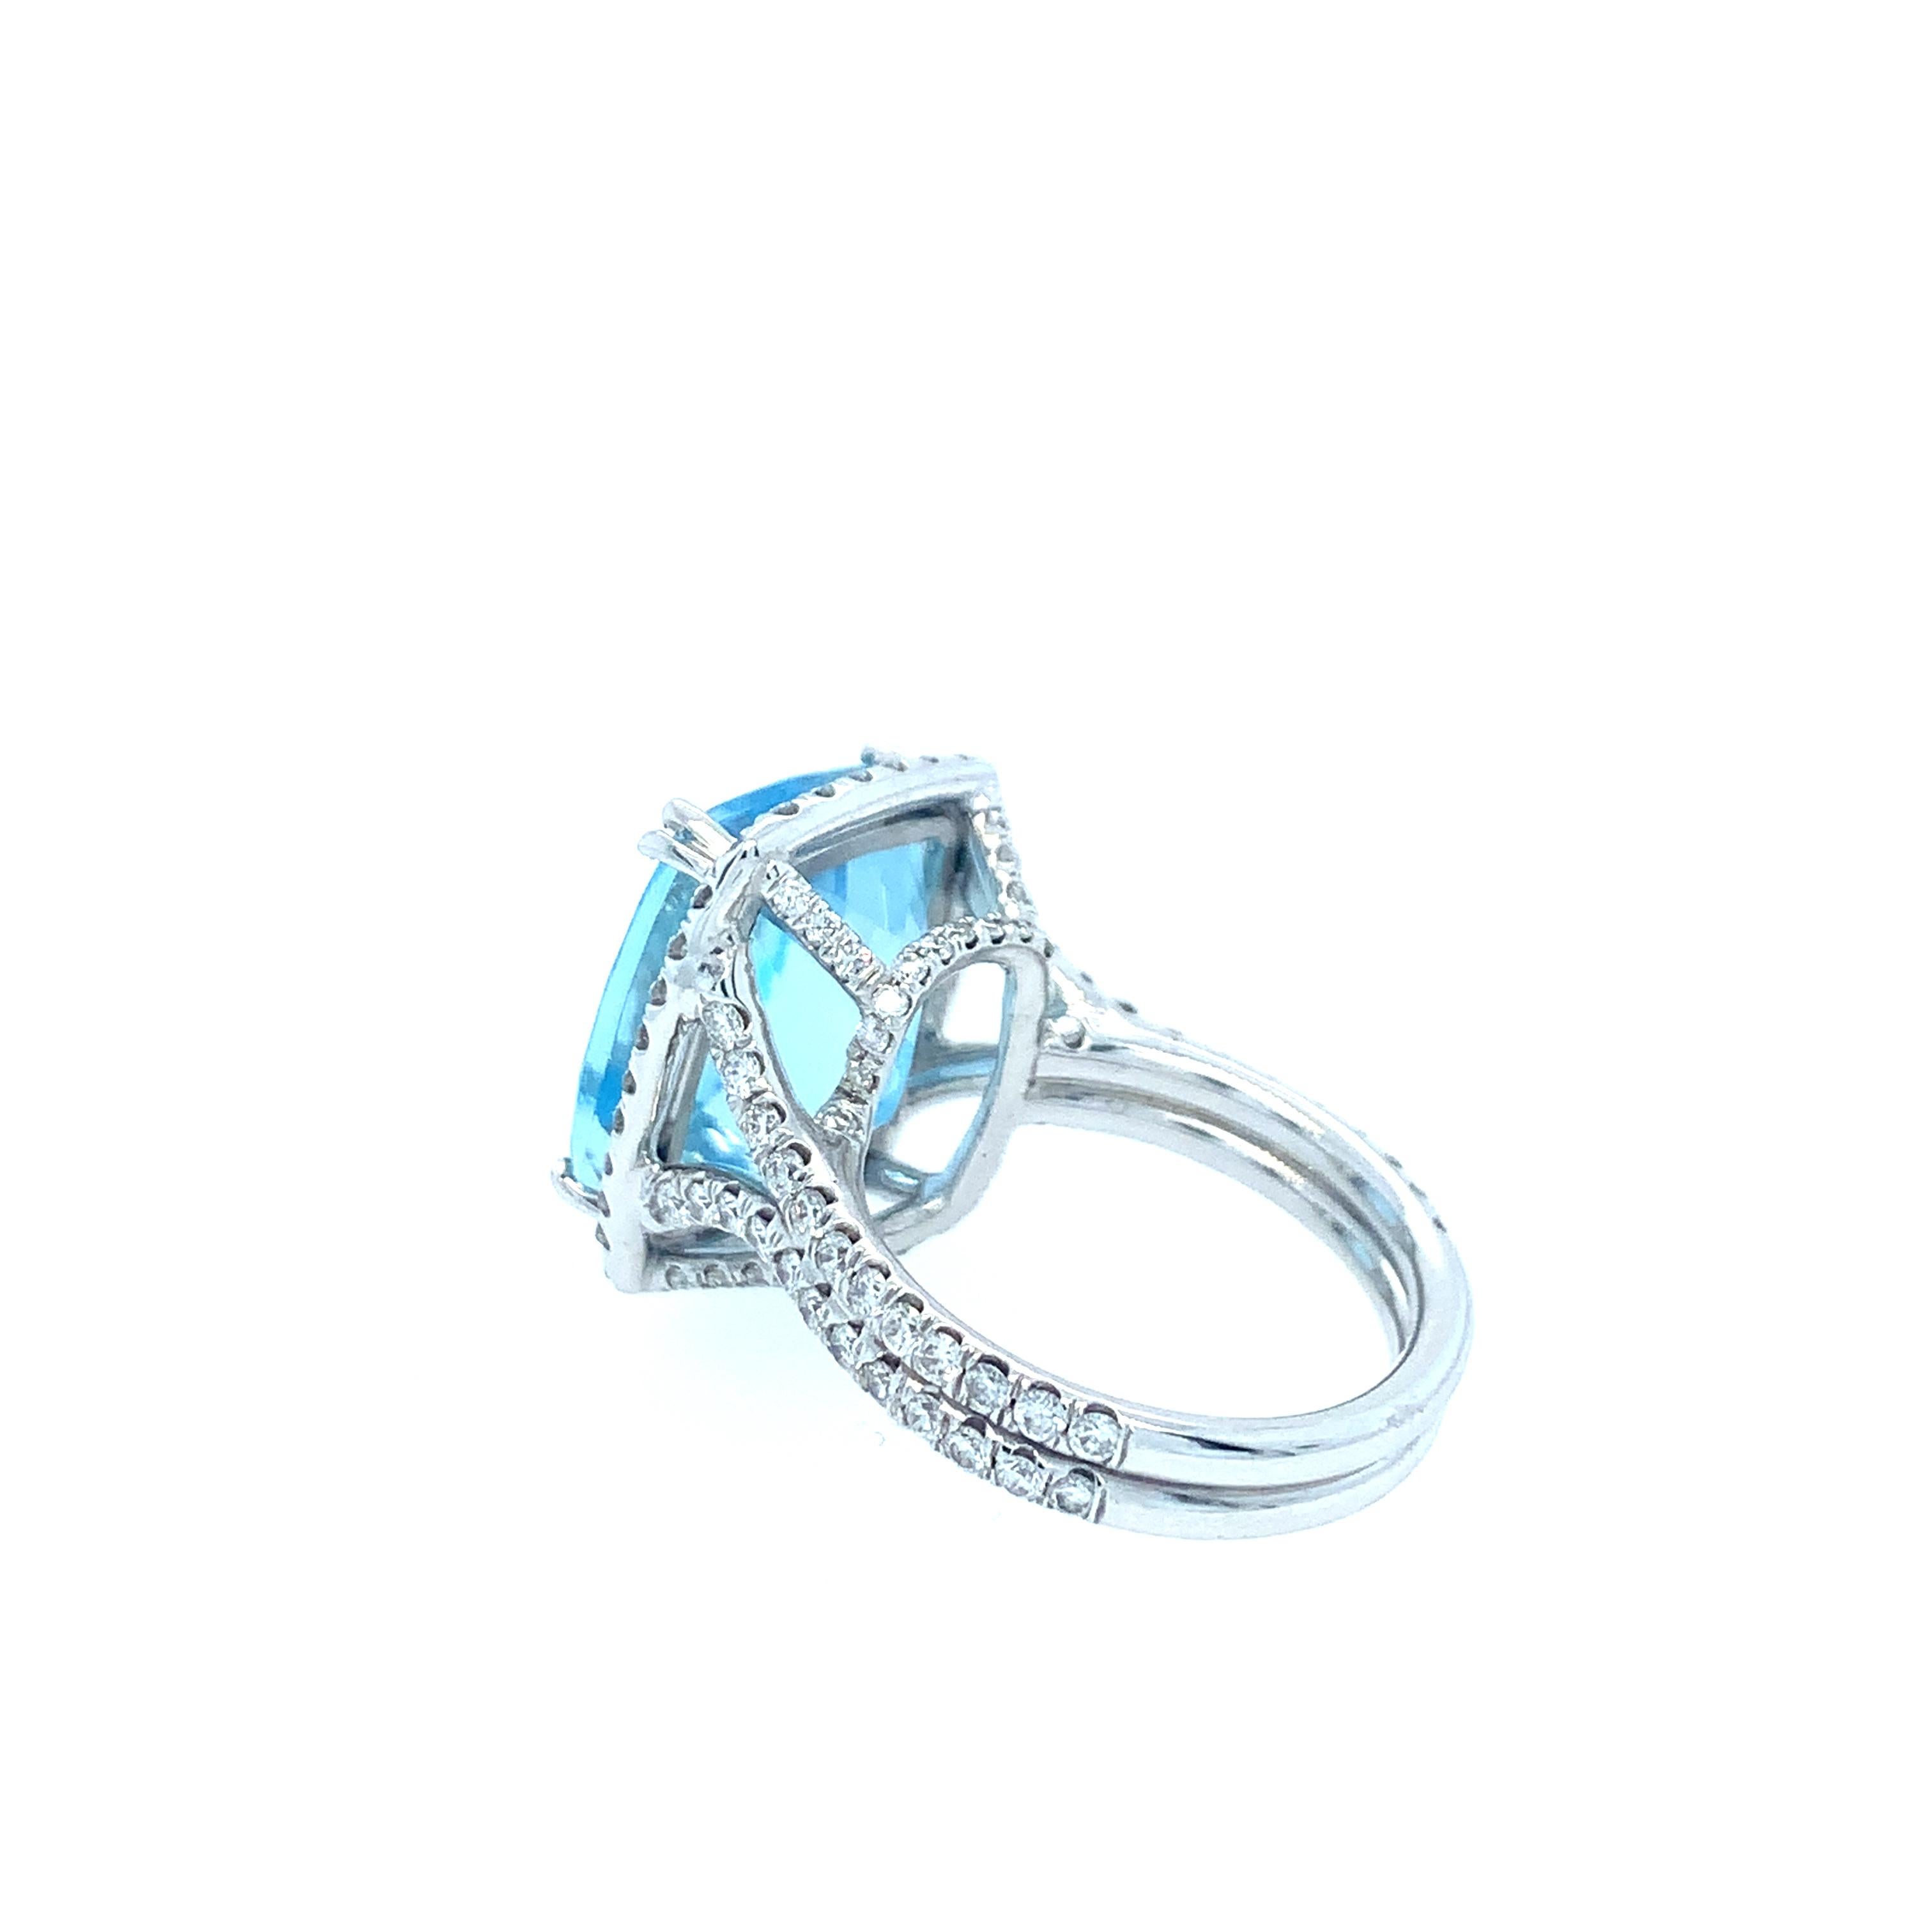 Cushion Cut 10.77 Carat Aquamarine and 1.27 Carat Diamond Ring For Sale